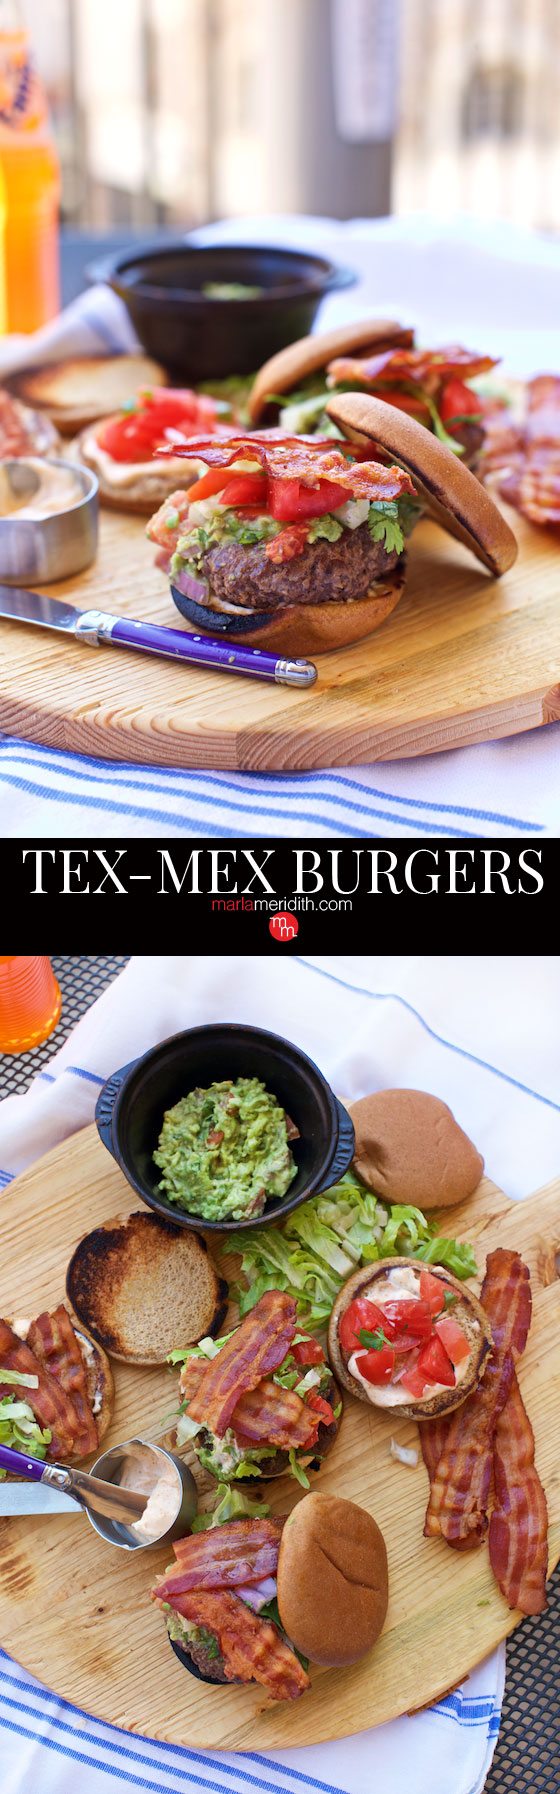 TEX-MEX BURGERS with all the fixings! Guacamole, crispy bacon, fresh pico de gallo and lemon chipotle mayo. MarlaMeridith.com ( @marlameridith )